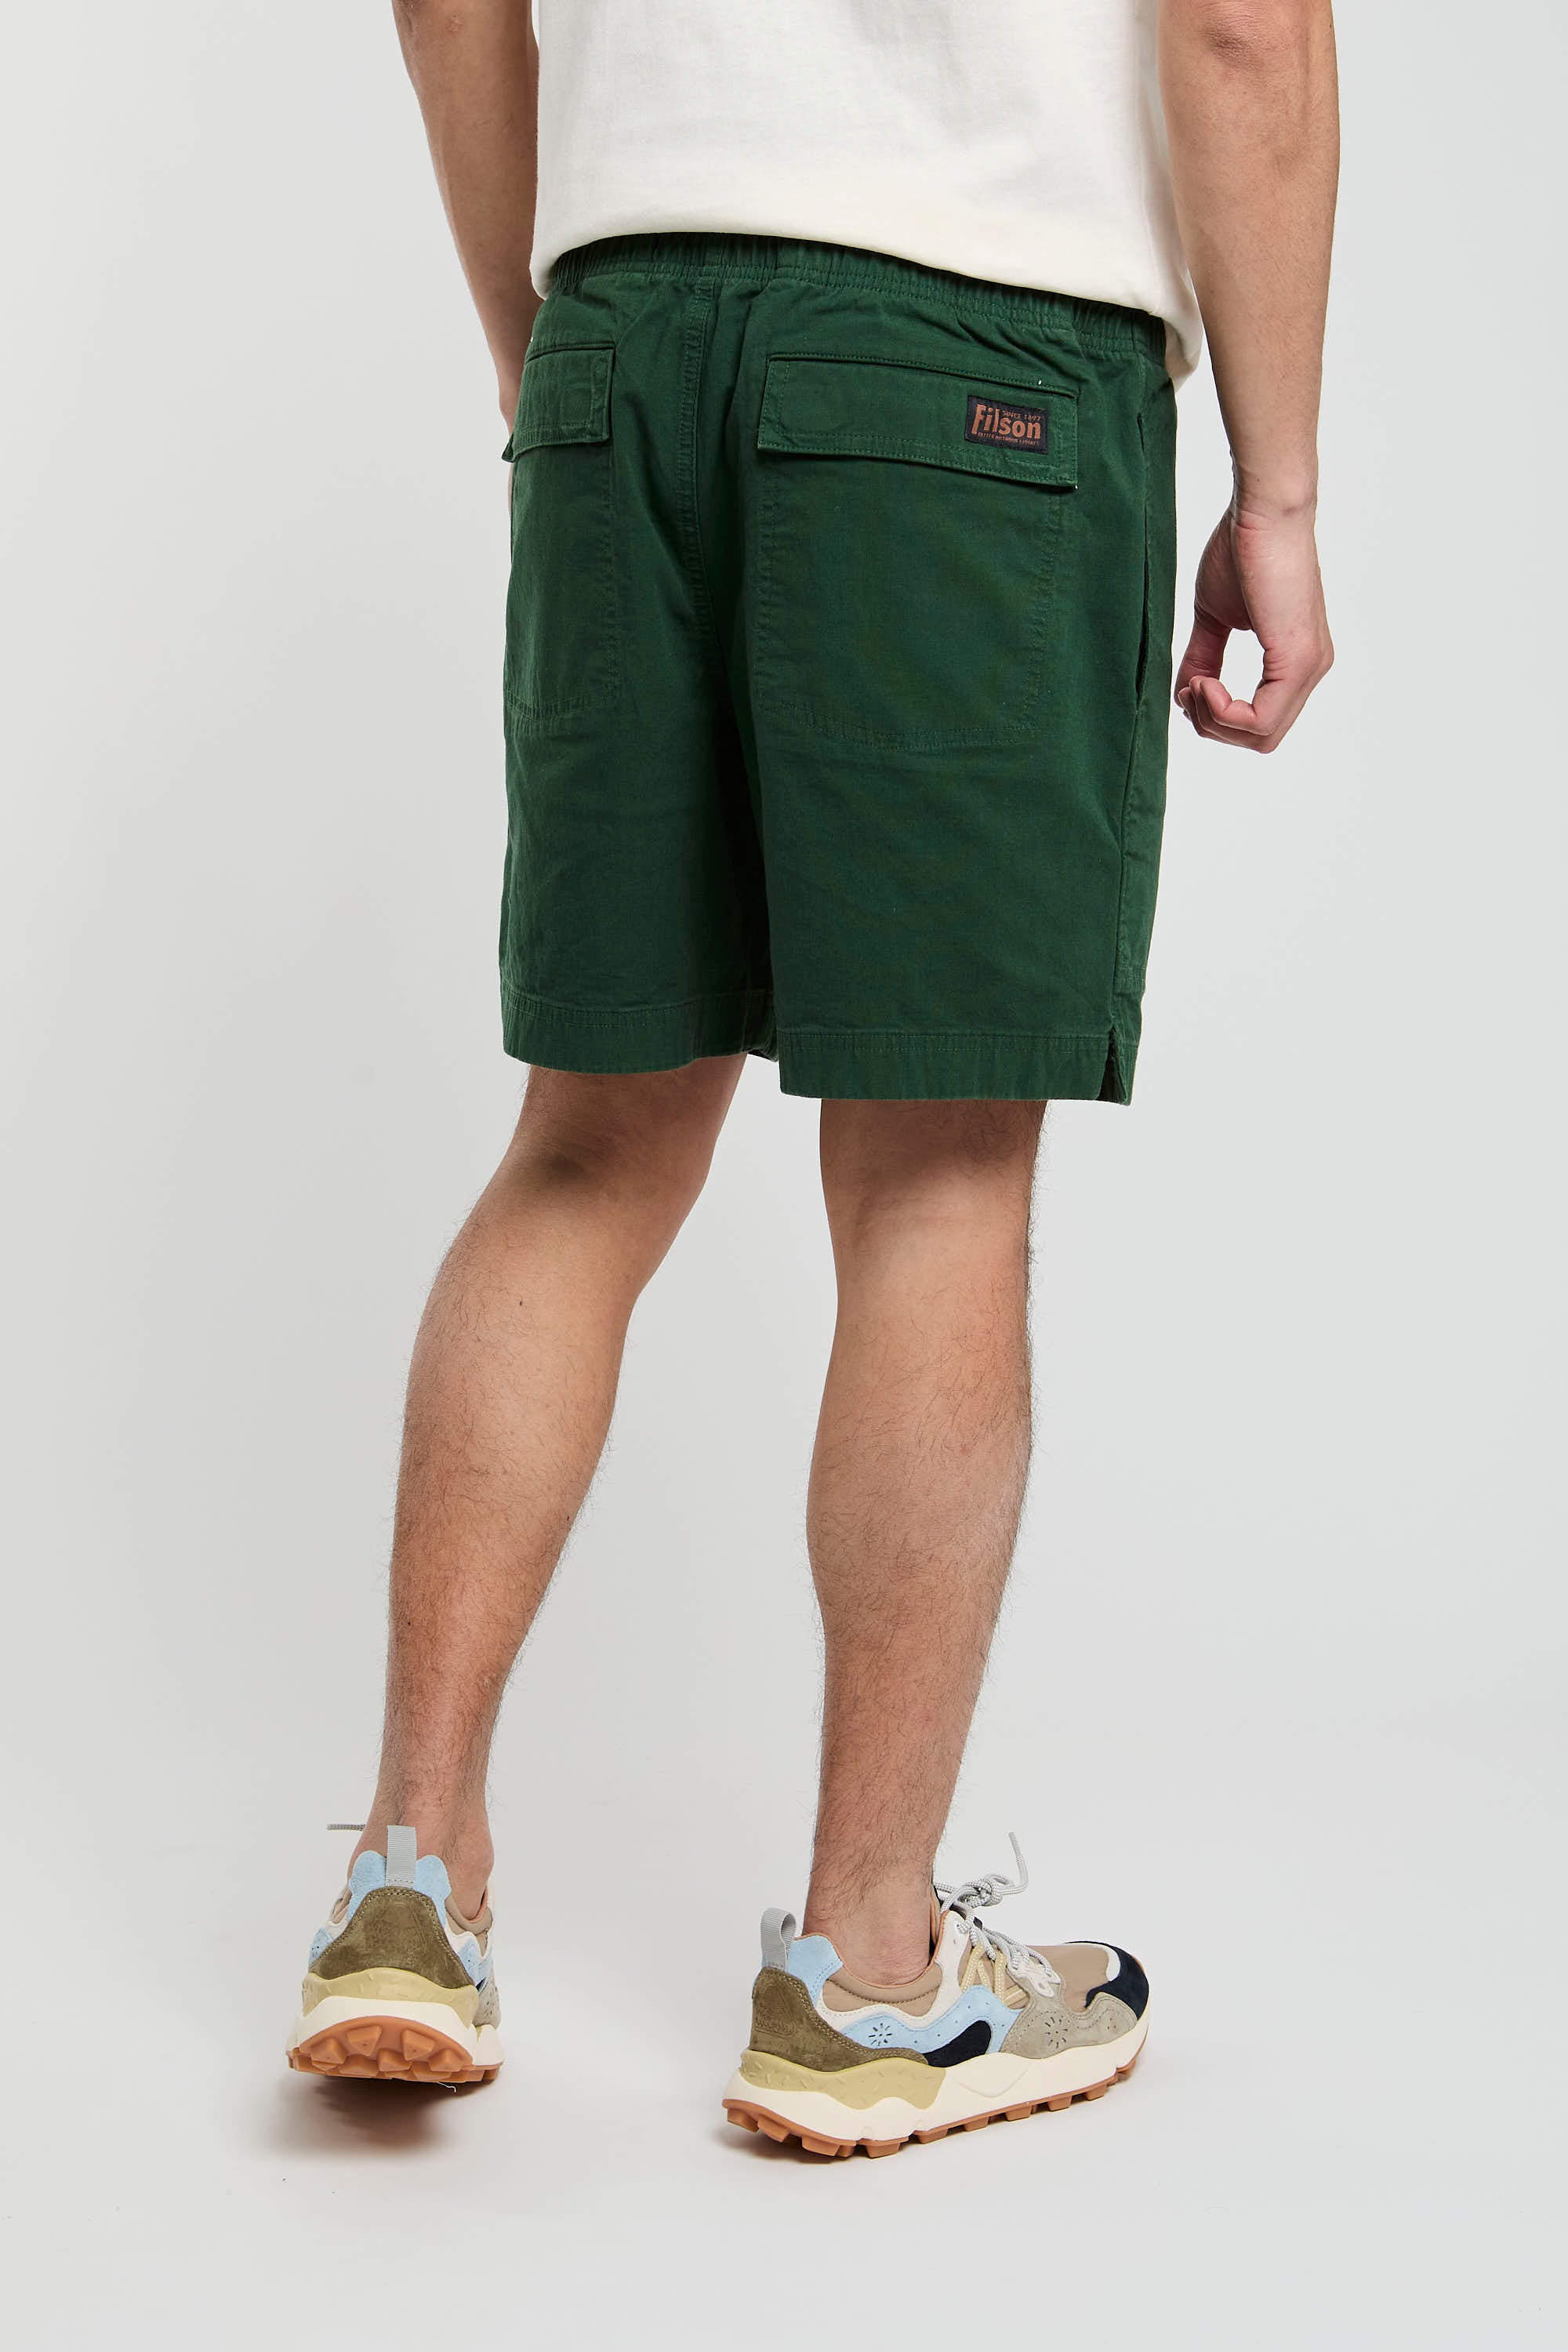 Filson Stretch Cotton Bermuda Shorts in Green-5